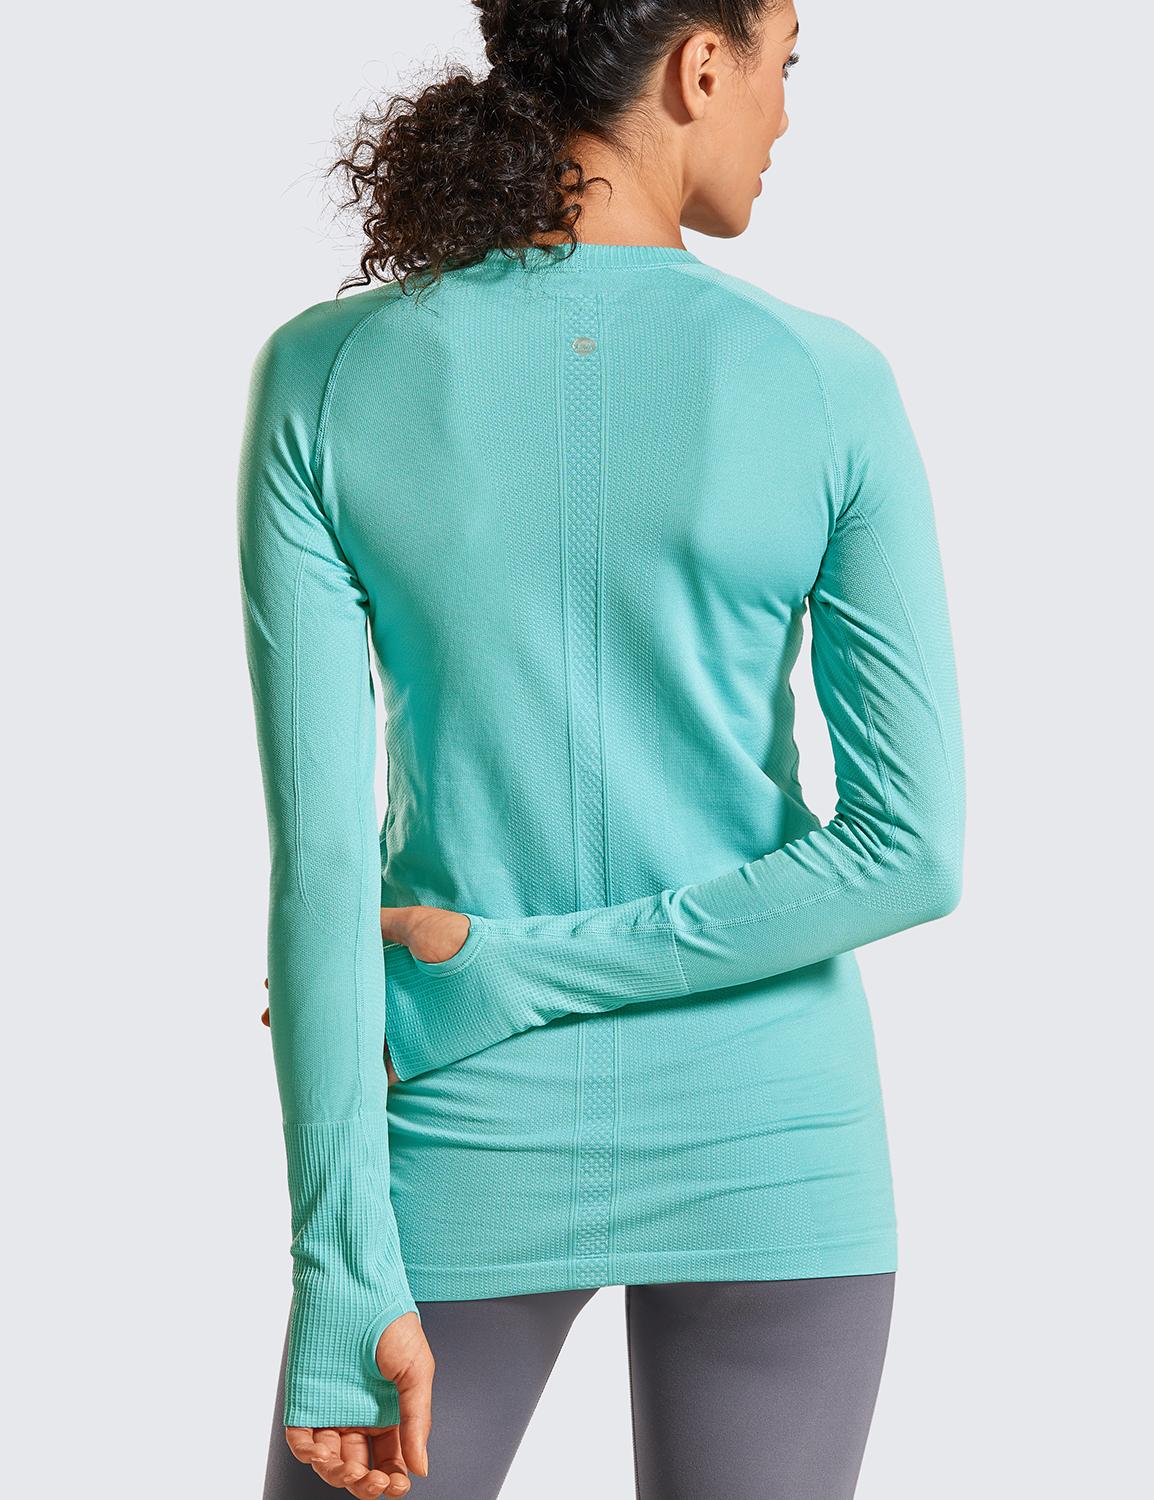 Crz Yoga Womens Athletic Long Sleeves Seamless Sports Run Shirt Breathable Top Ebay